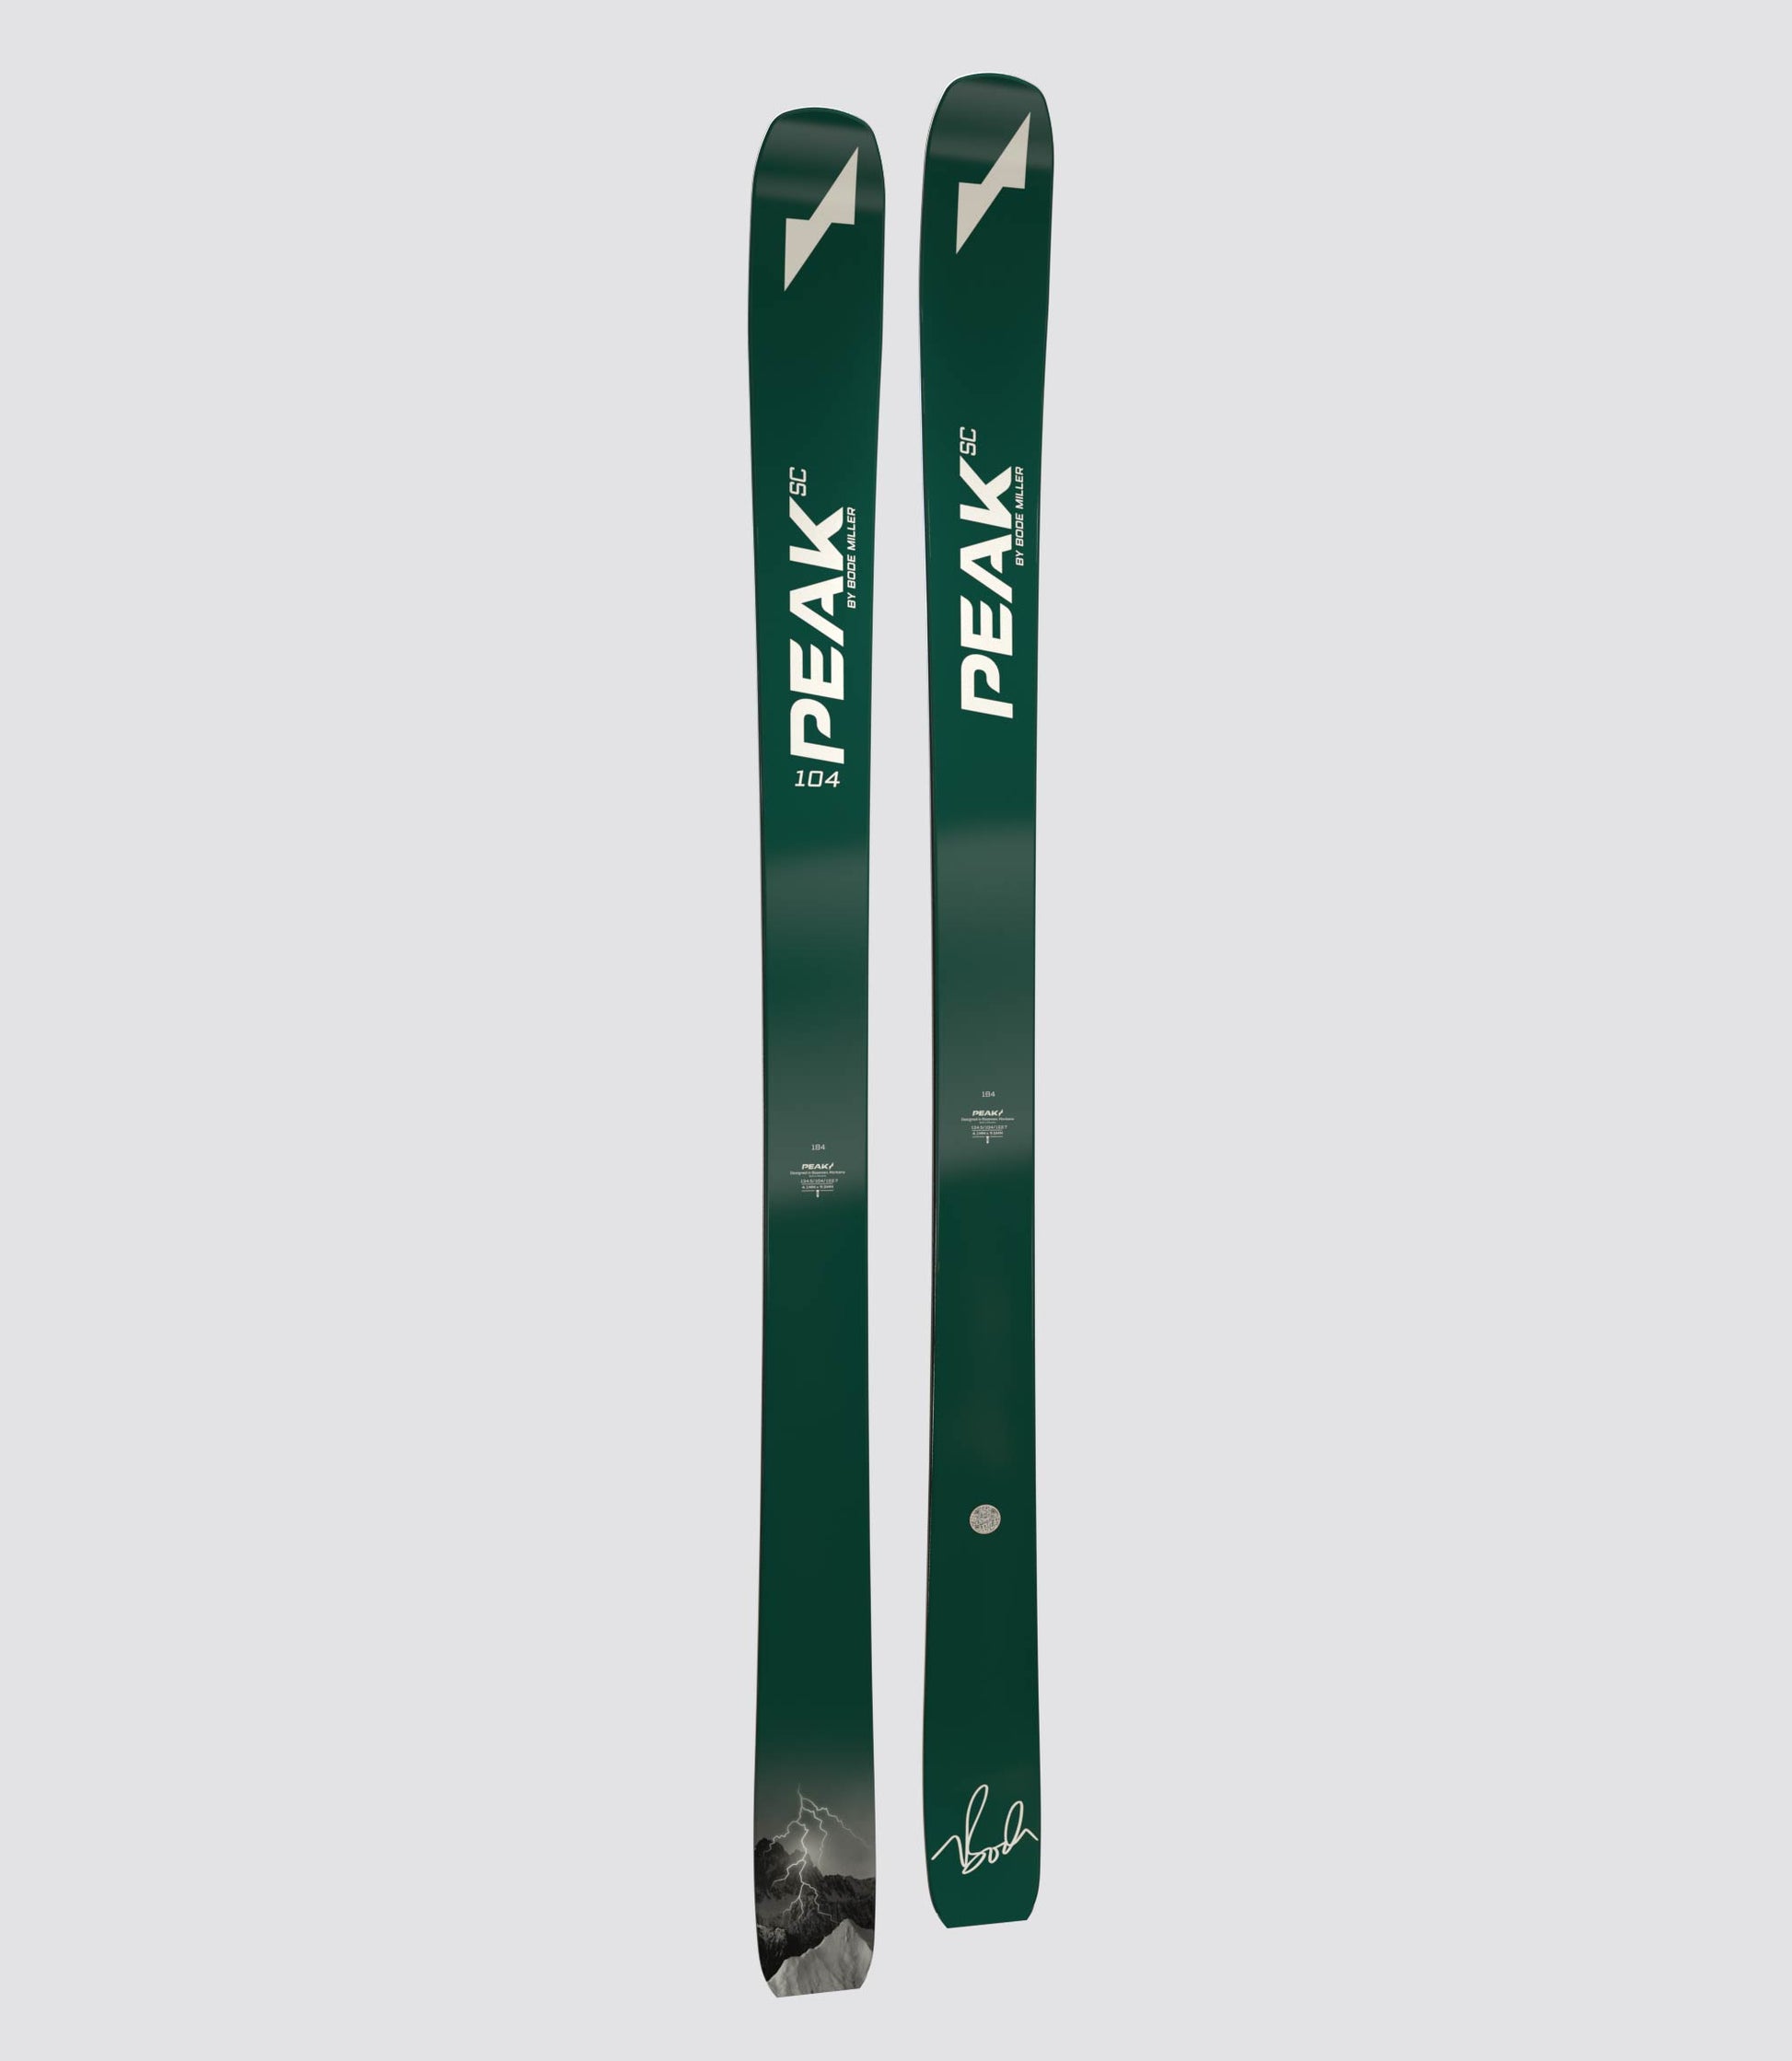 Peak 104SC Skis by Bode Miller